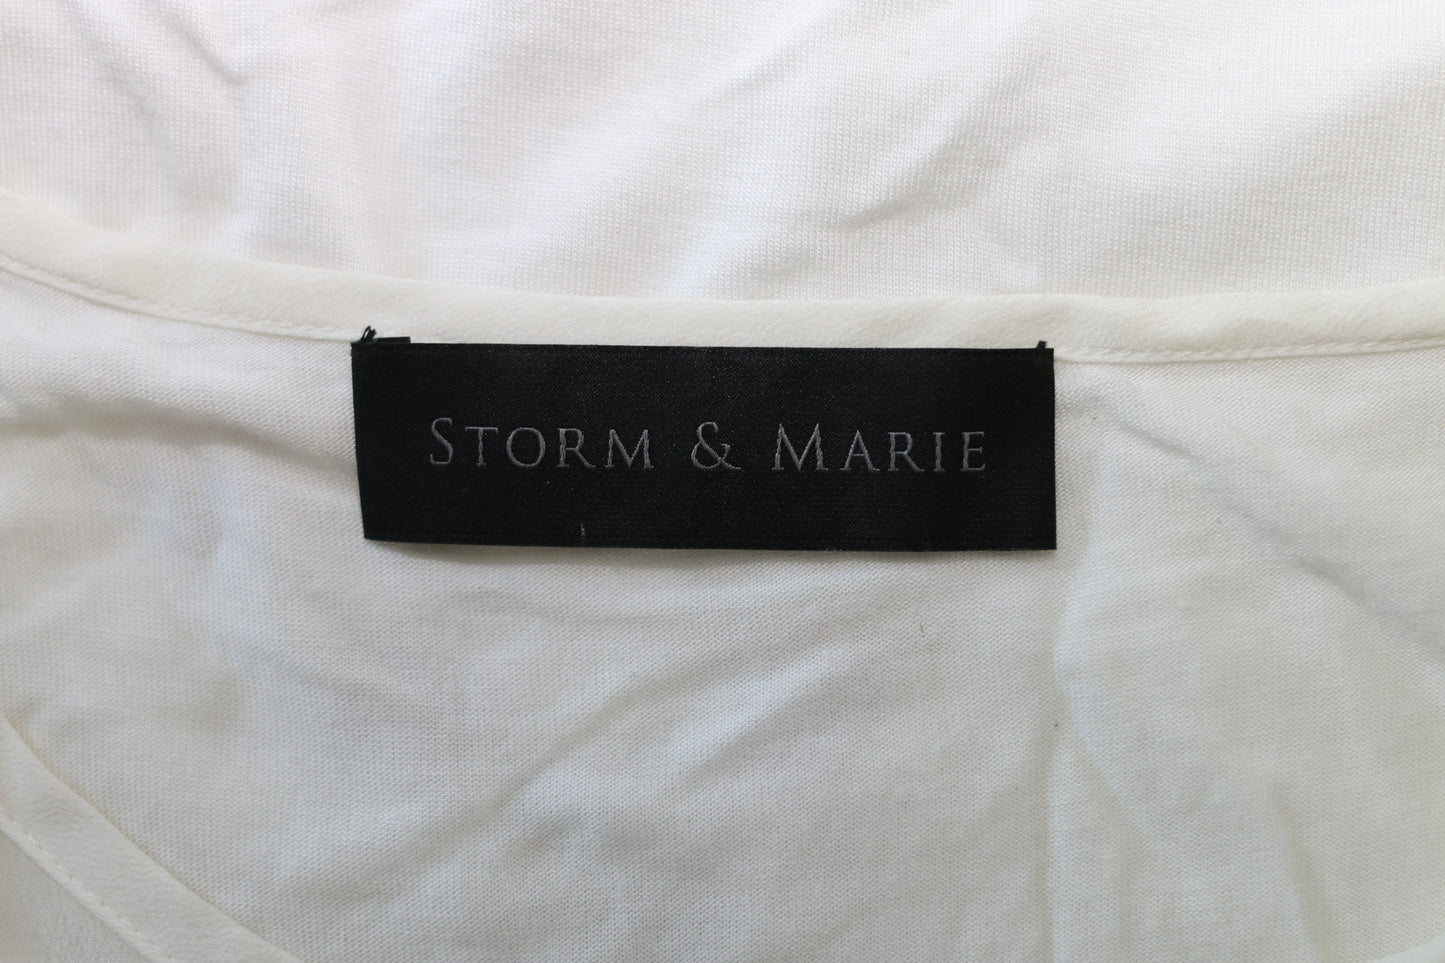 Storm & Marie top